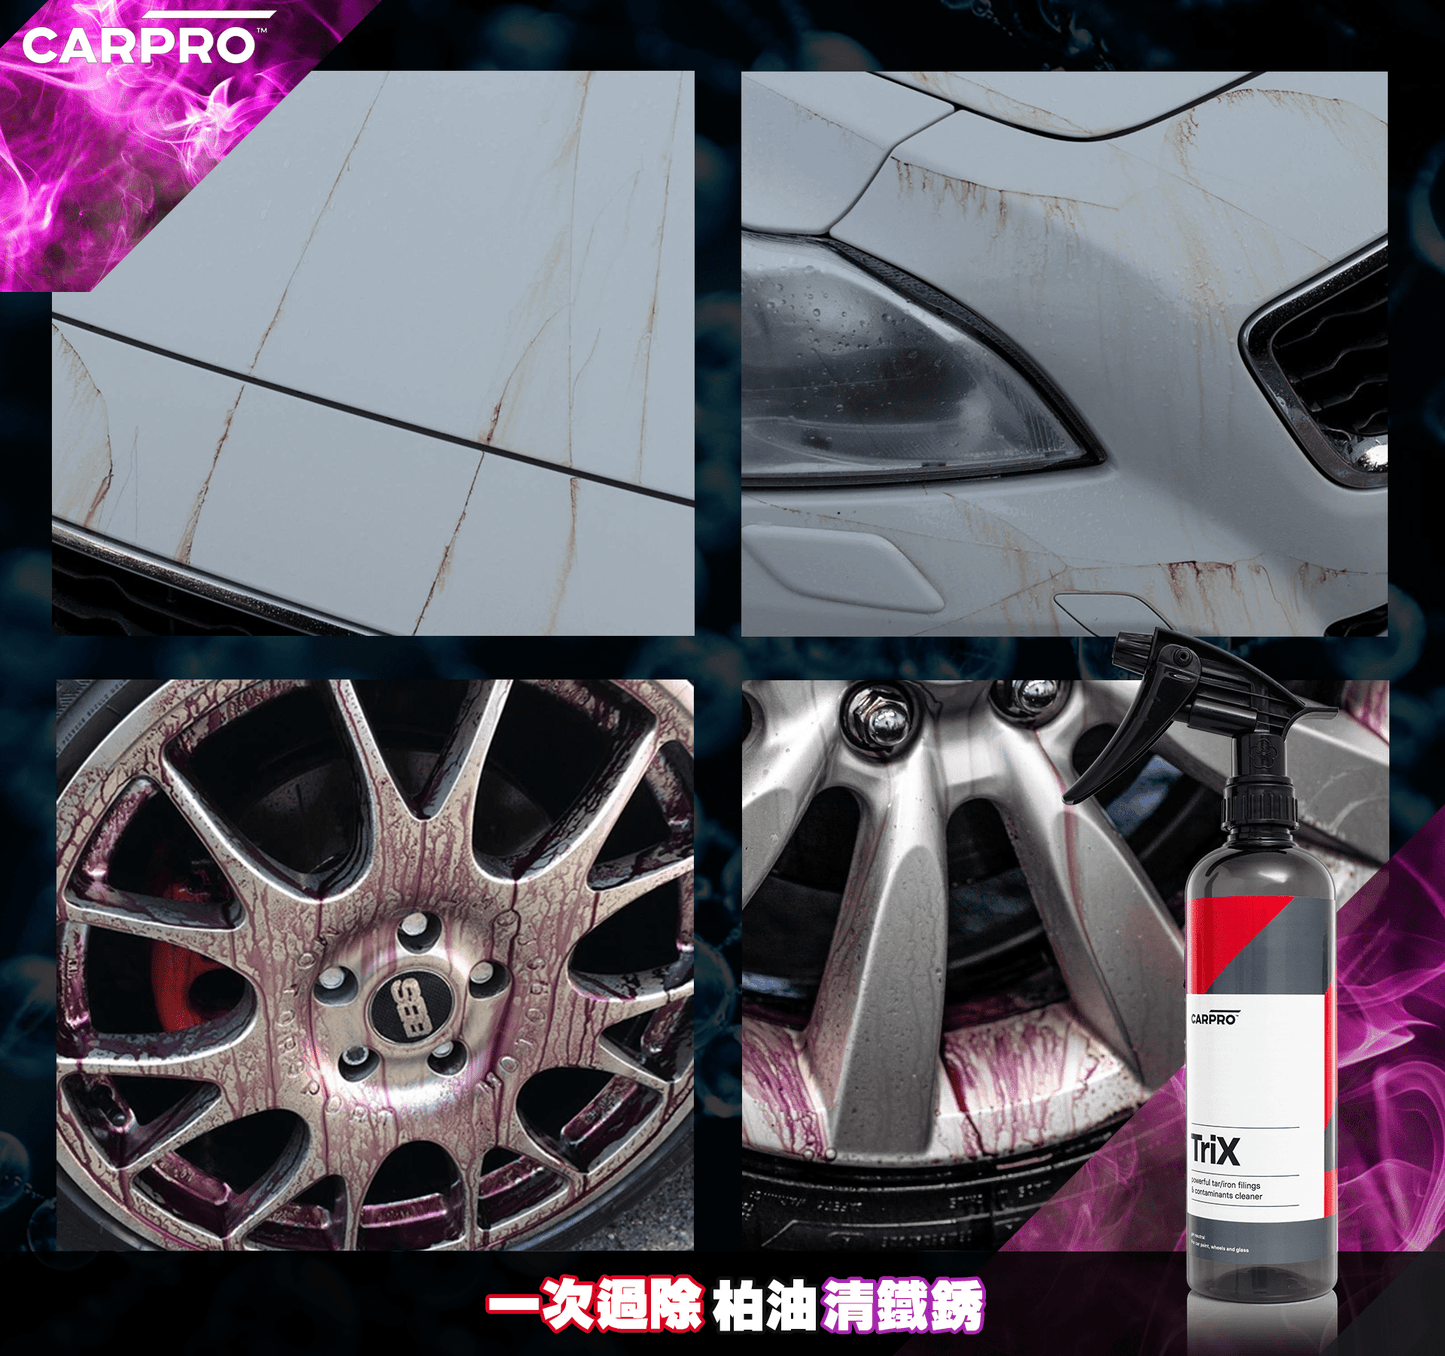 CARPRO | 鐵銹柏油 2合1 TRIX Tar and Iron Cleaner | 韓國製 | MOOBI 香港網上汽車用品店 p5